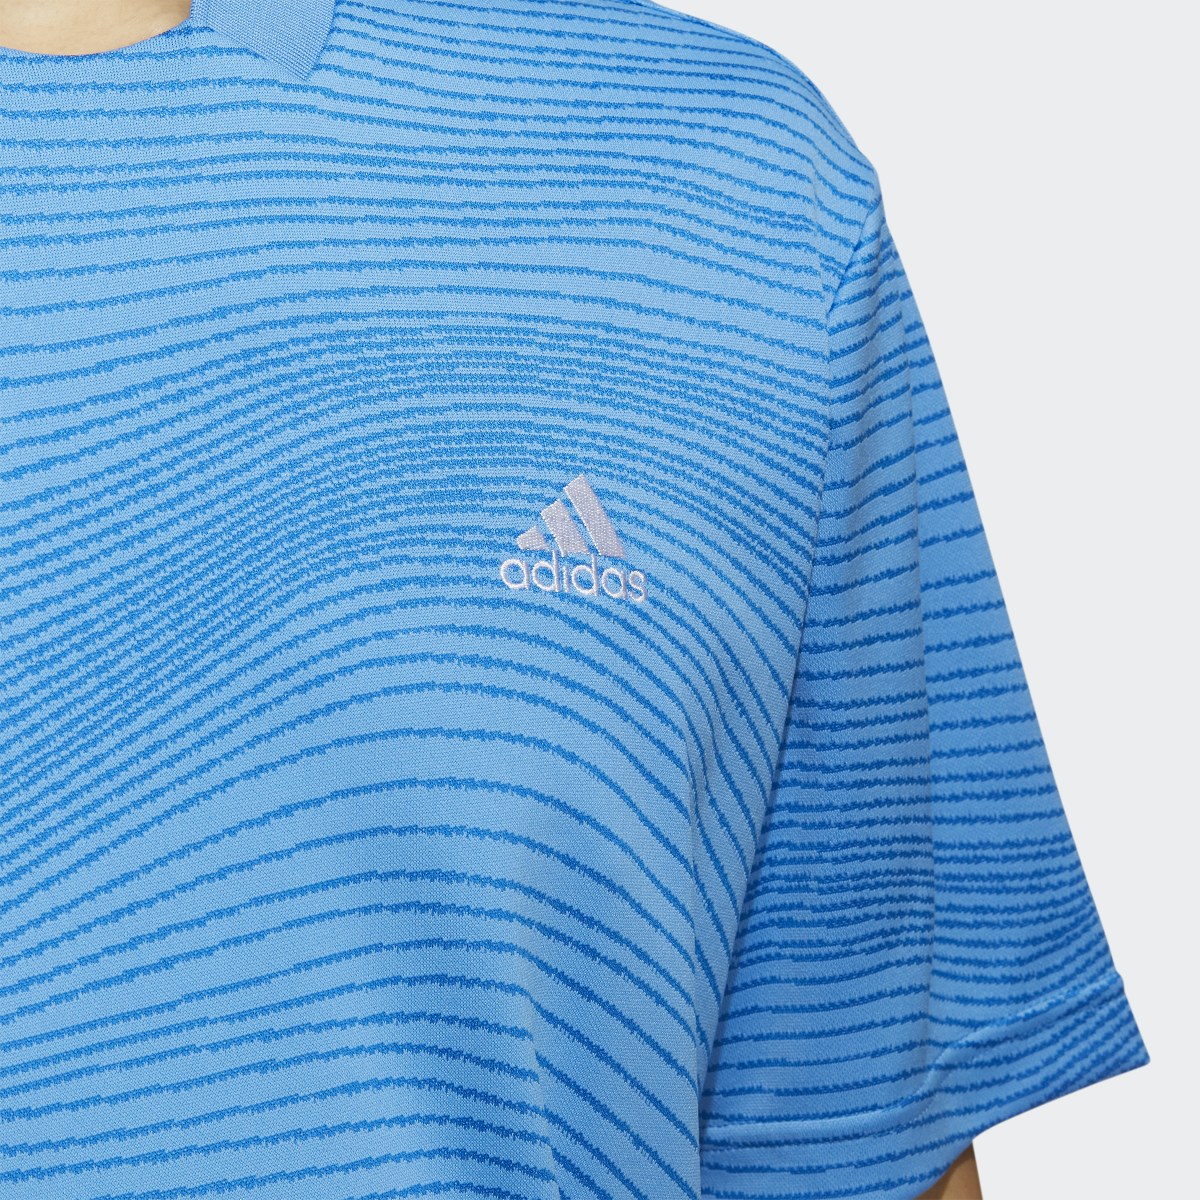 Adidas Made to be Remade Rib Collar Shirt. 7